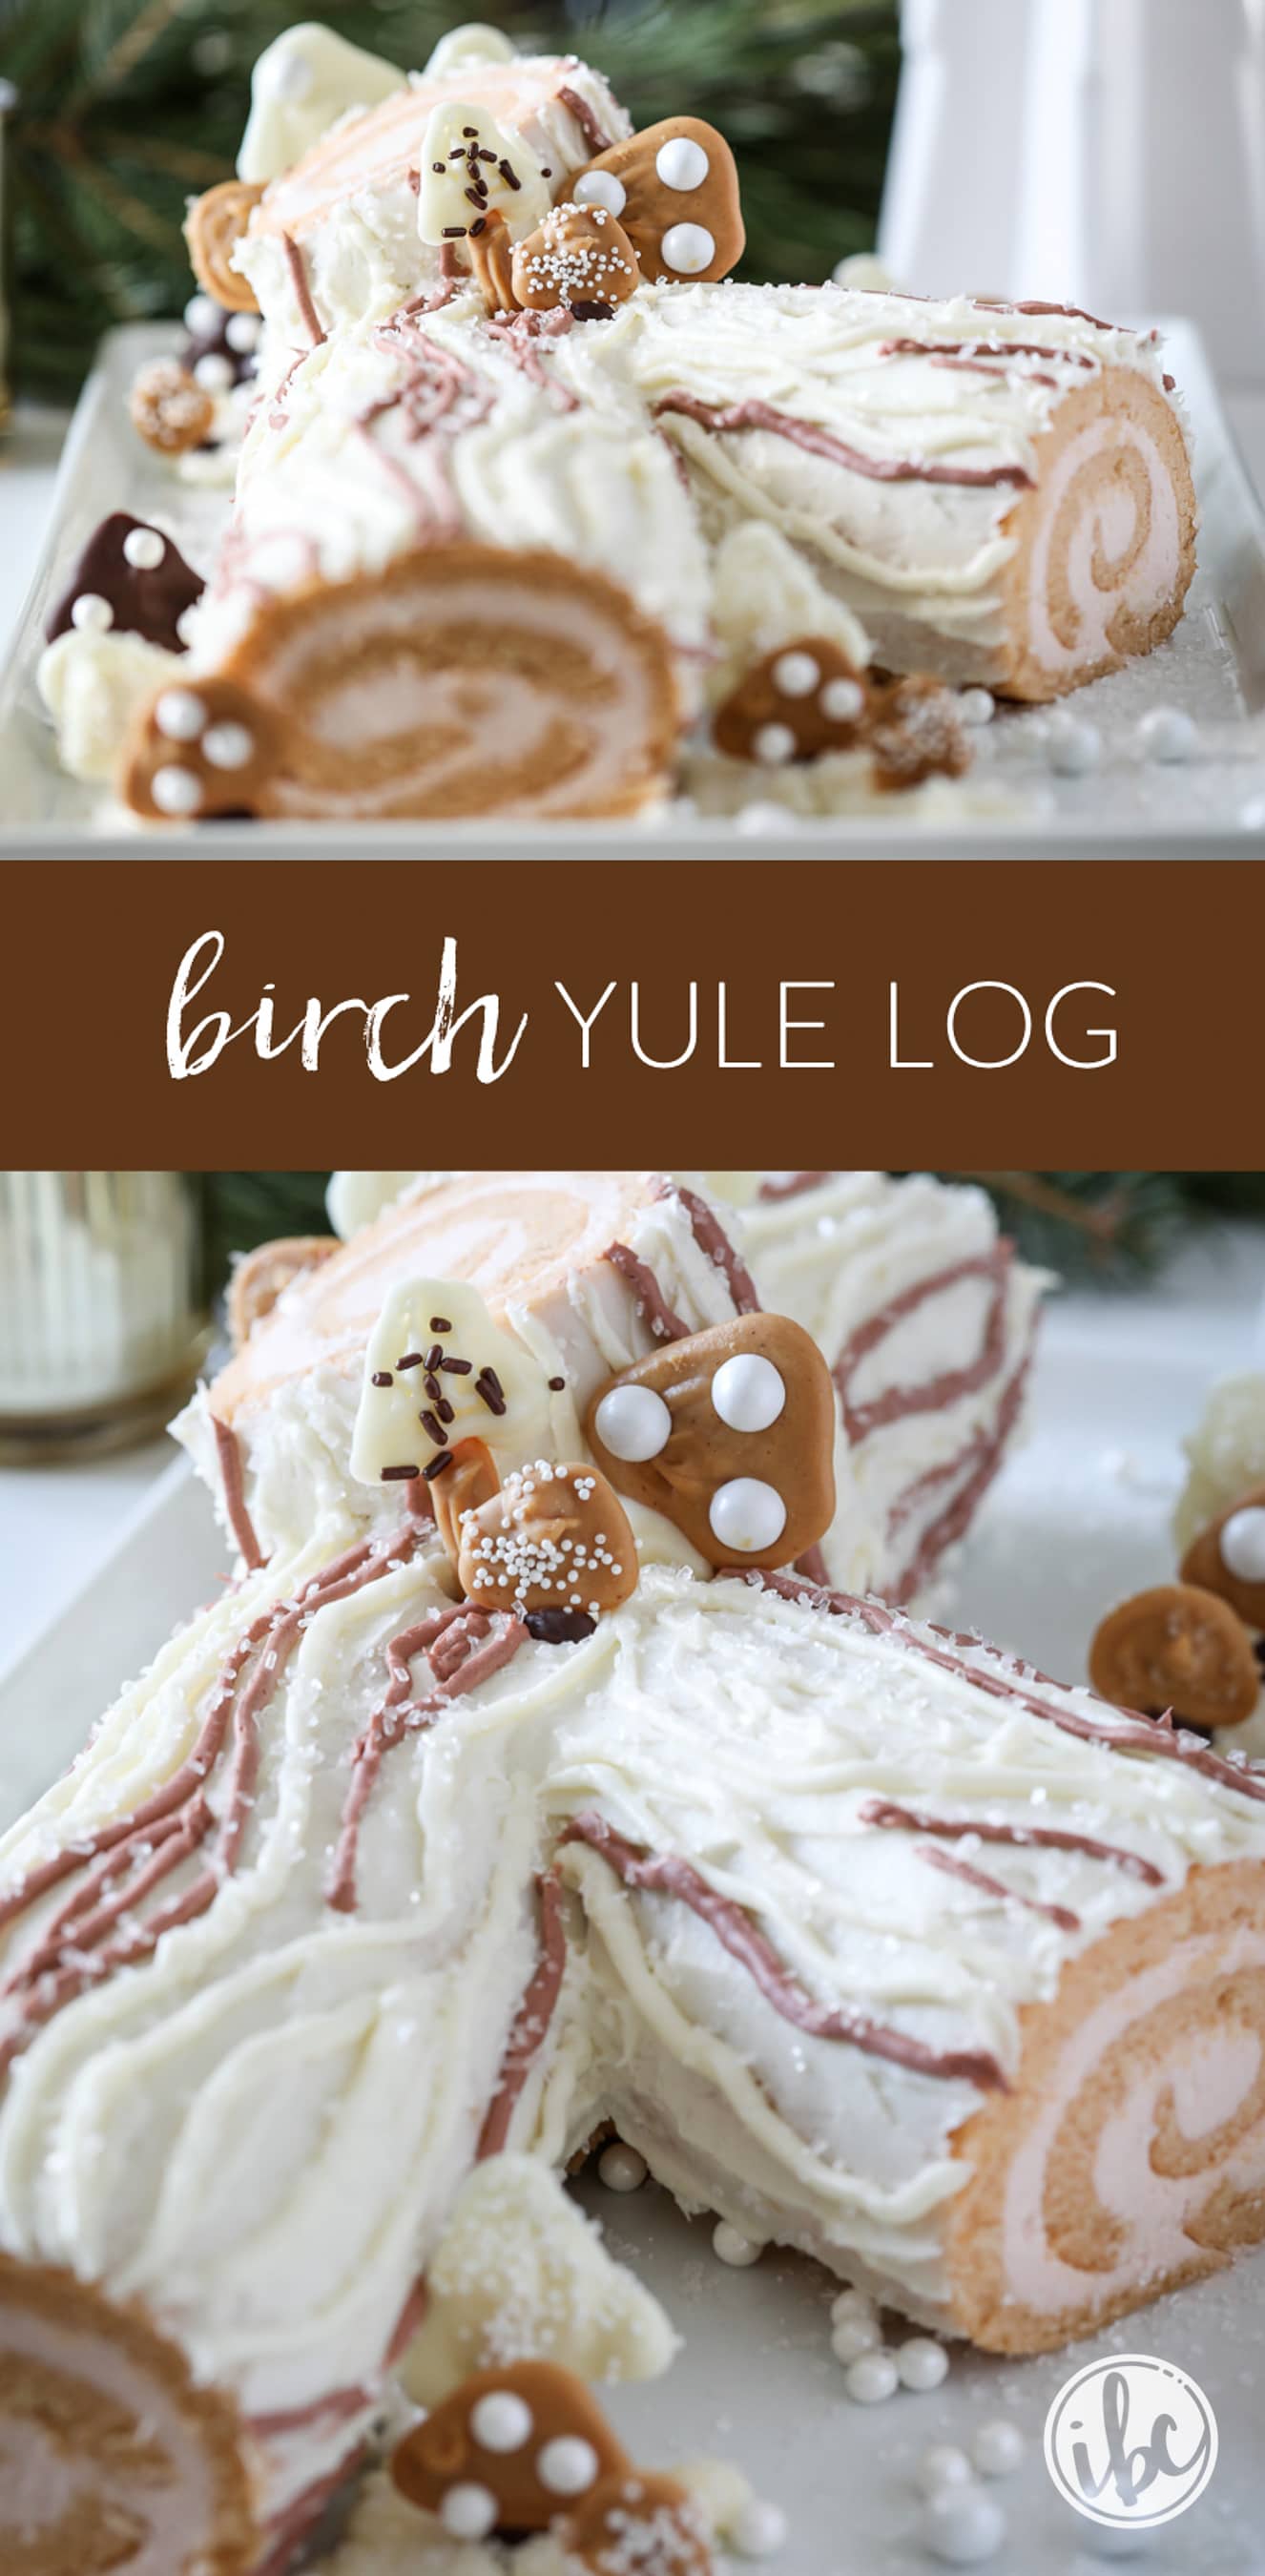 Delicious and beautiful Birch Yule Log Recipe for Christmas entertaining! #yulelog #yule #cake #christmascake #chirstmas #holiday #dessert #recipe